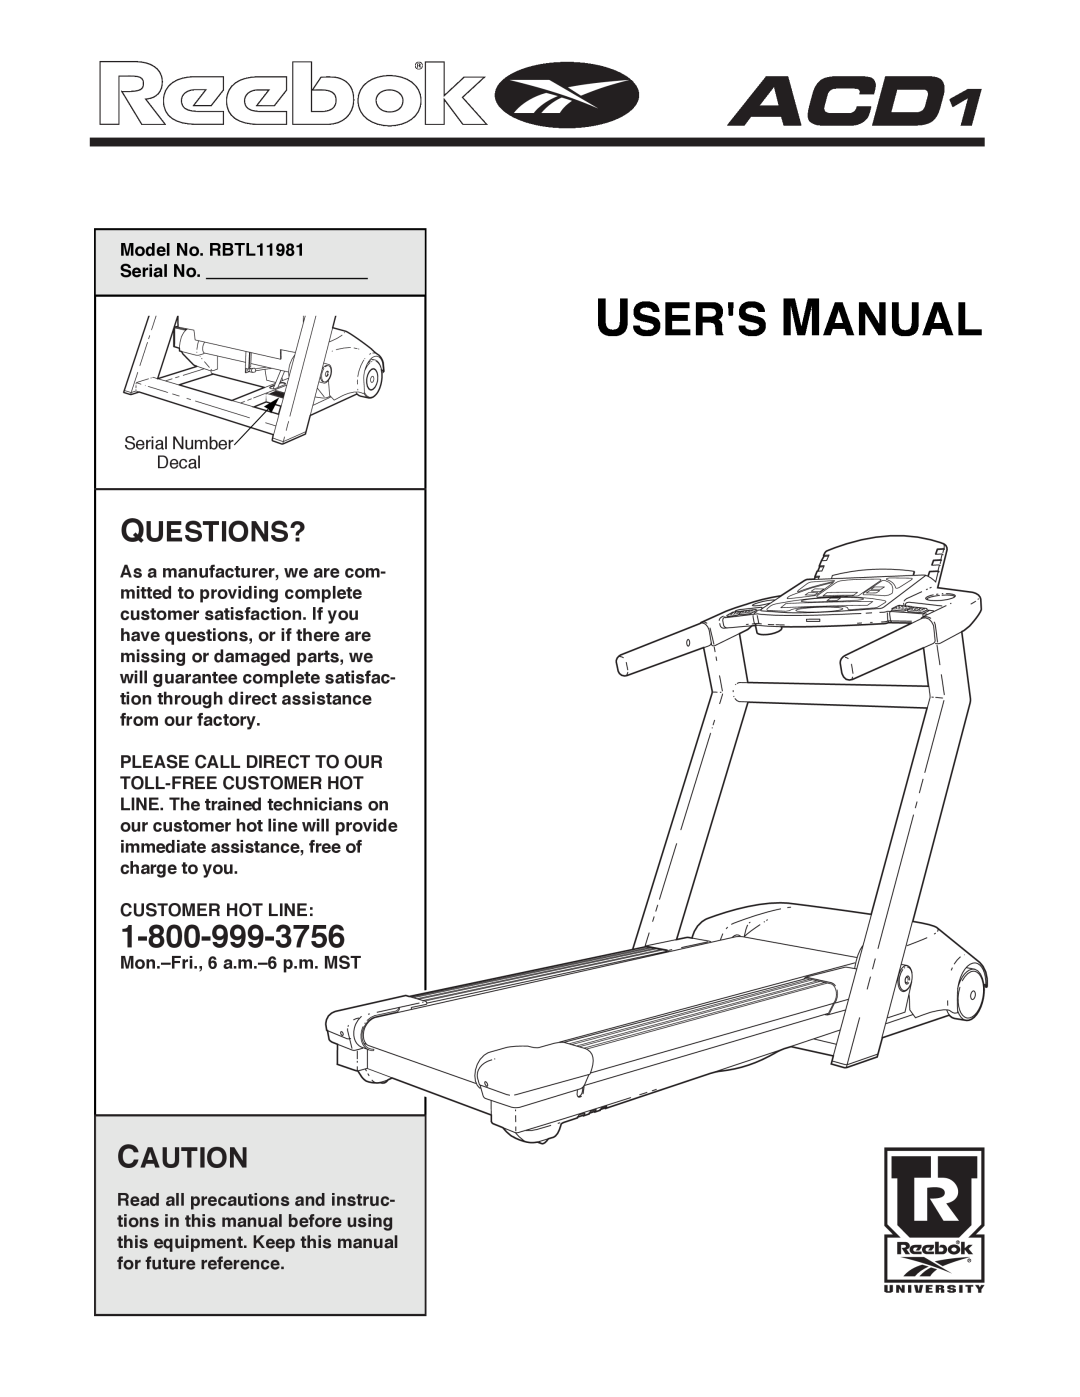 Reebok Fitness manual Model No. RBTL11981 Serial No, Customer Hot Line, Mon.ÐFri., 6 a.m.Ð6 p.m. MST, Users Manual 